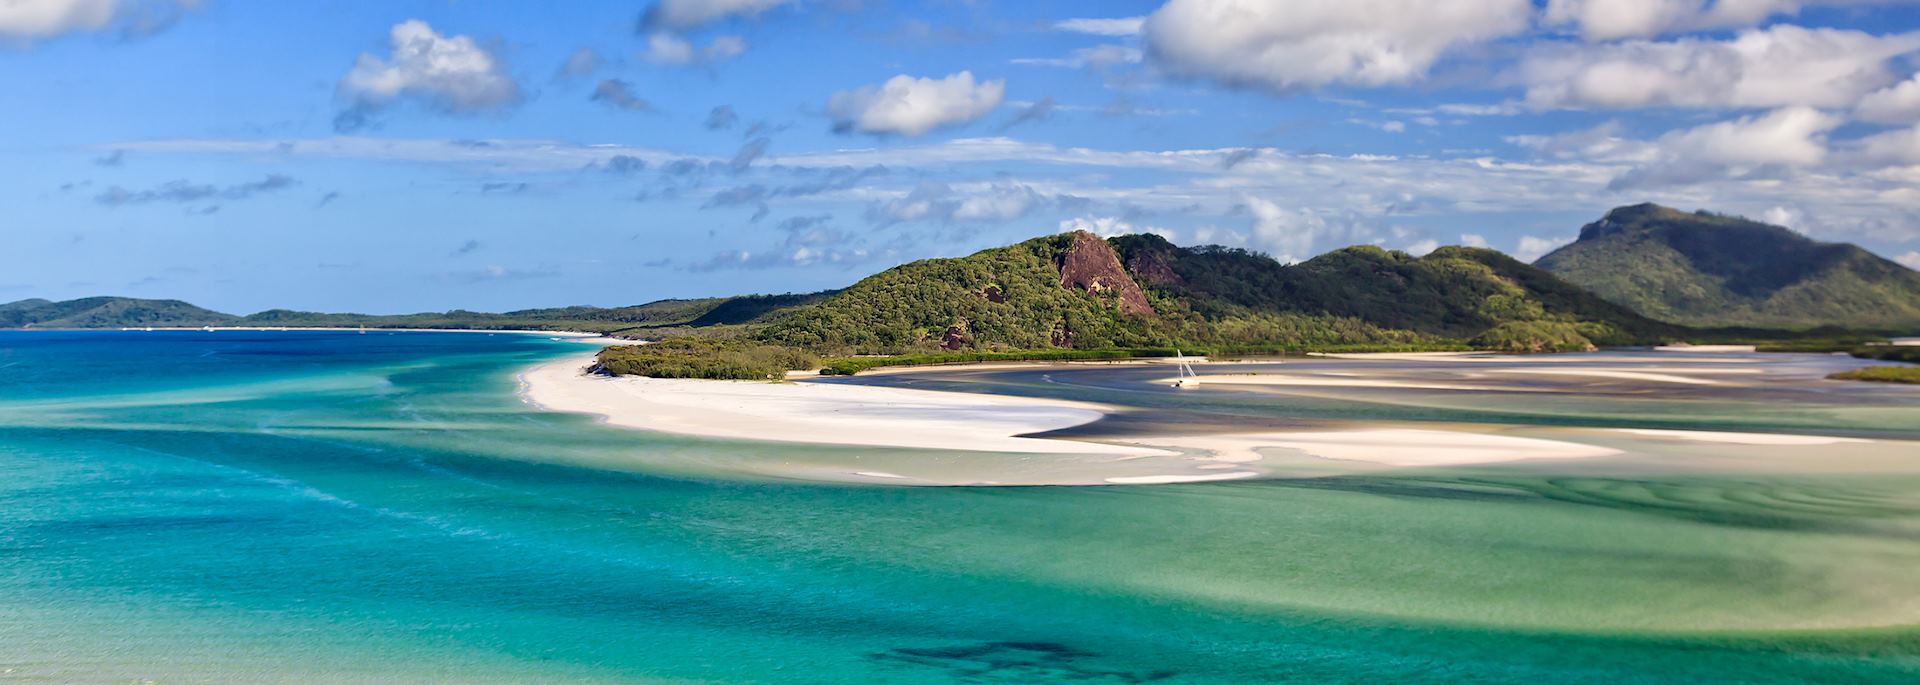 Whitsunday Islands, Queensland